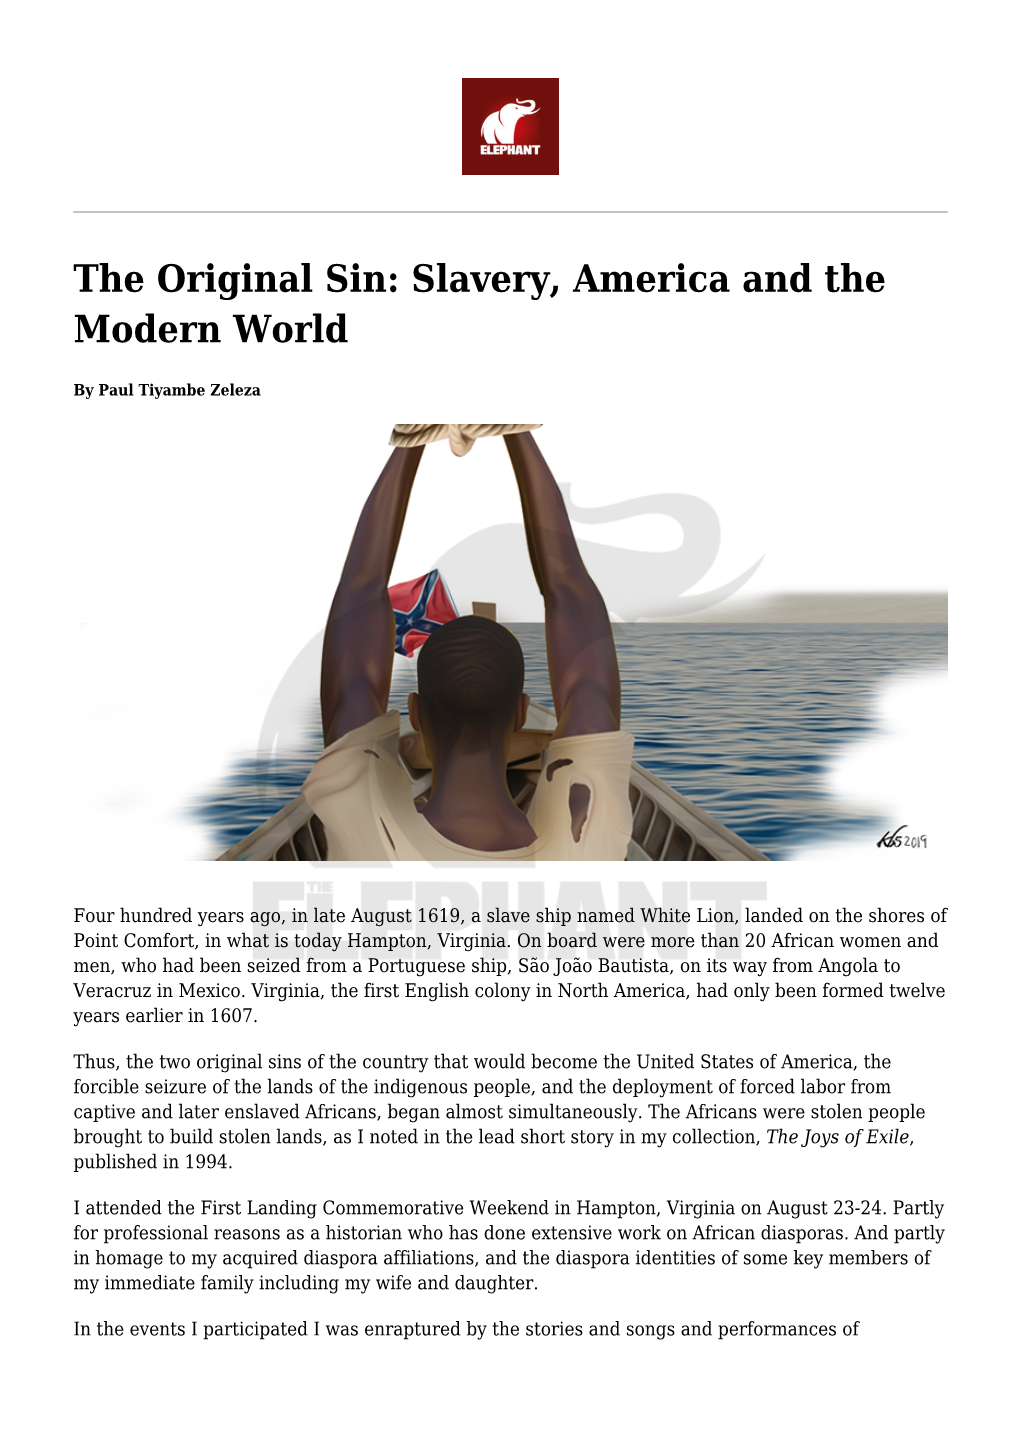 The Original Sin: Slavery, America and the Modern World